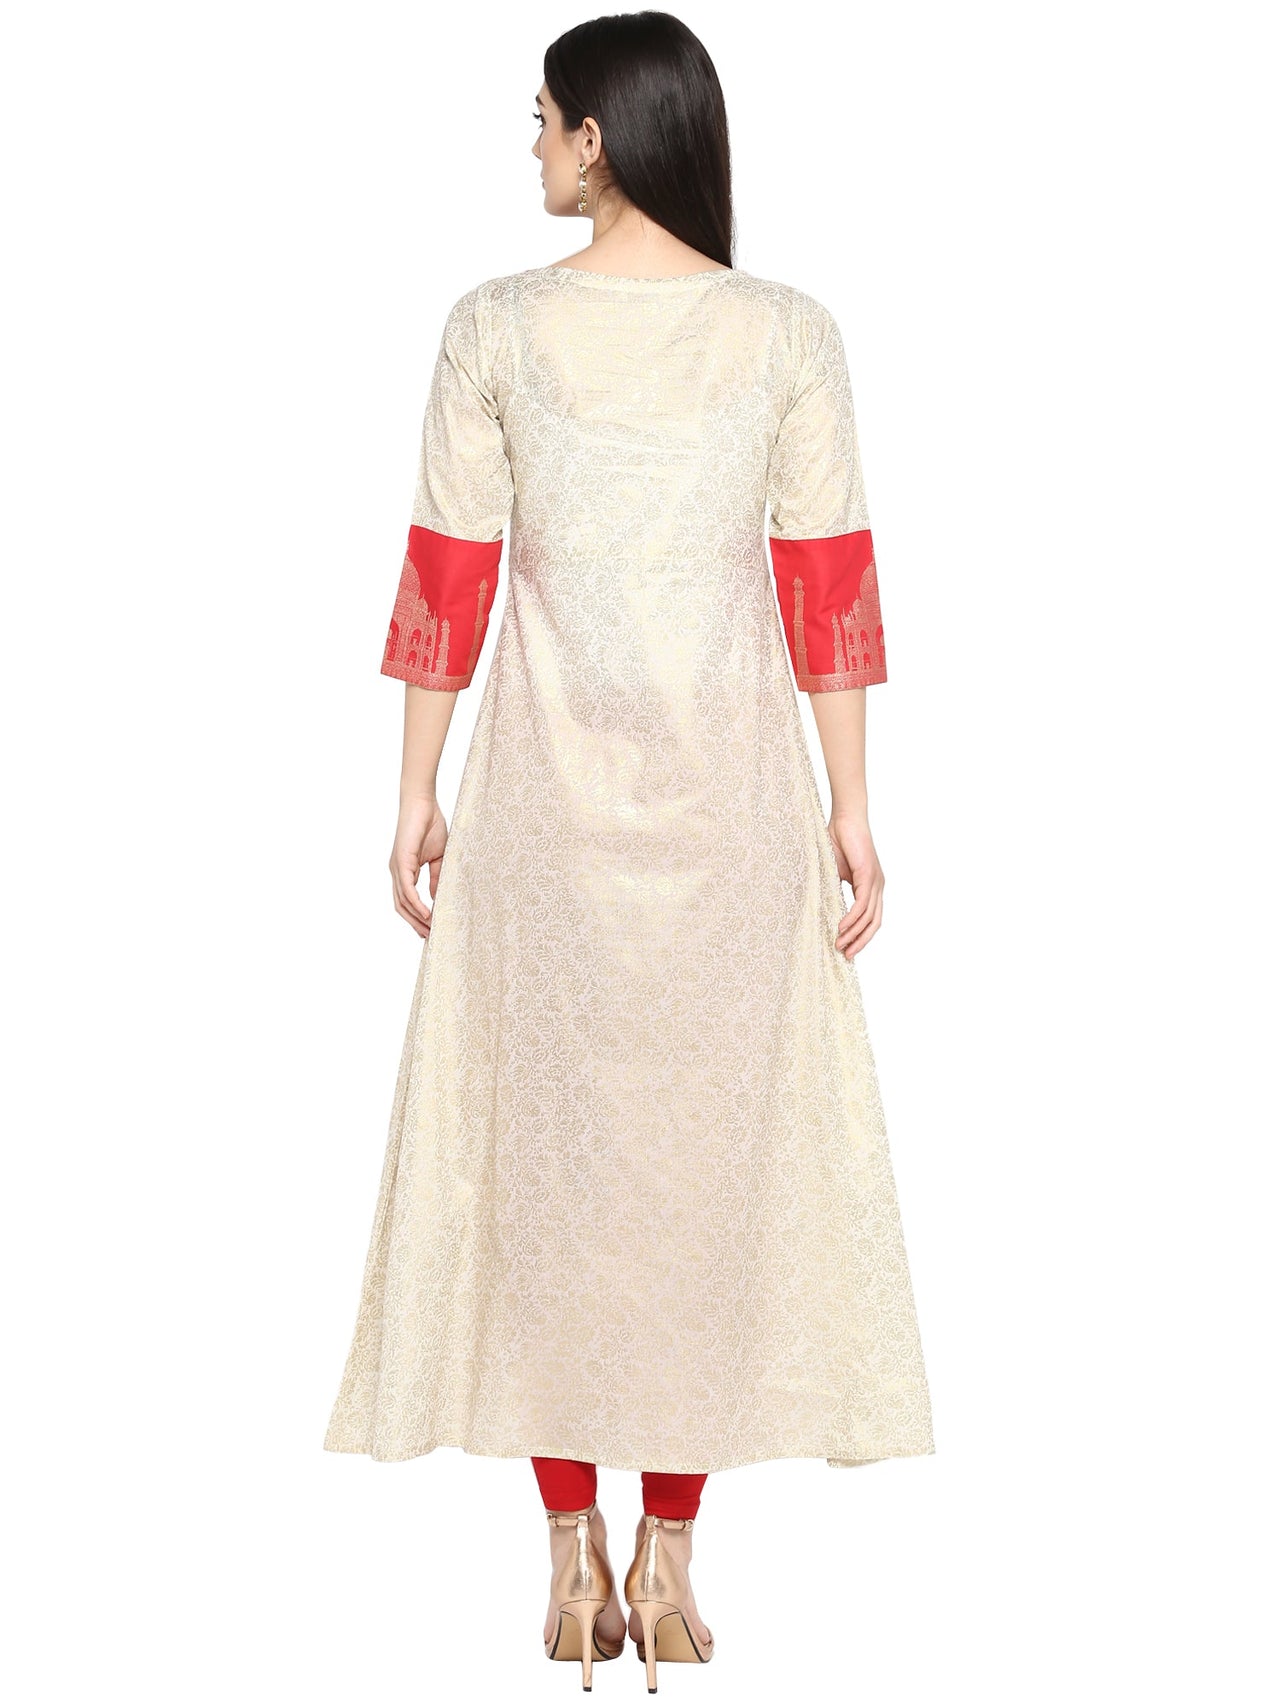 Ahalyaa Taj Mahal Print and Brocade Look Off White & Red Kurta